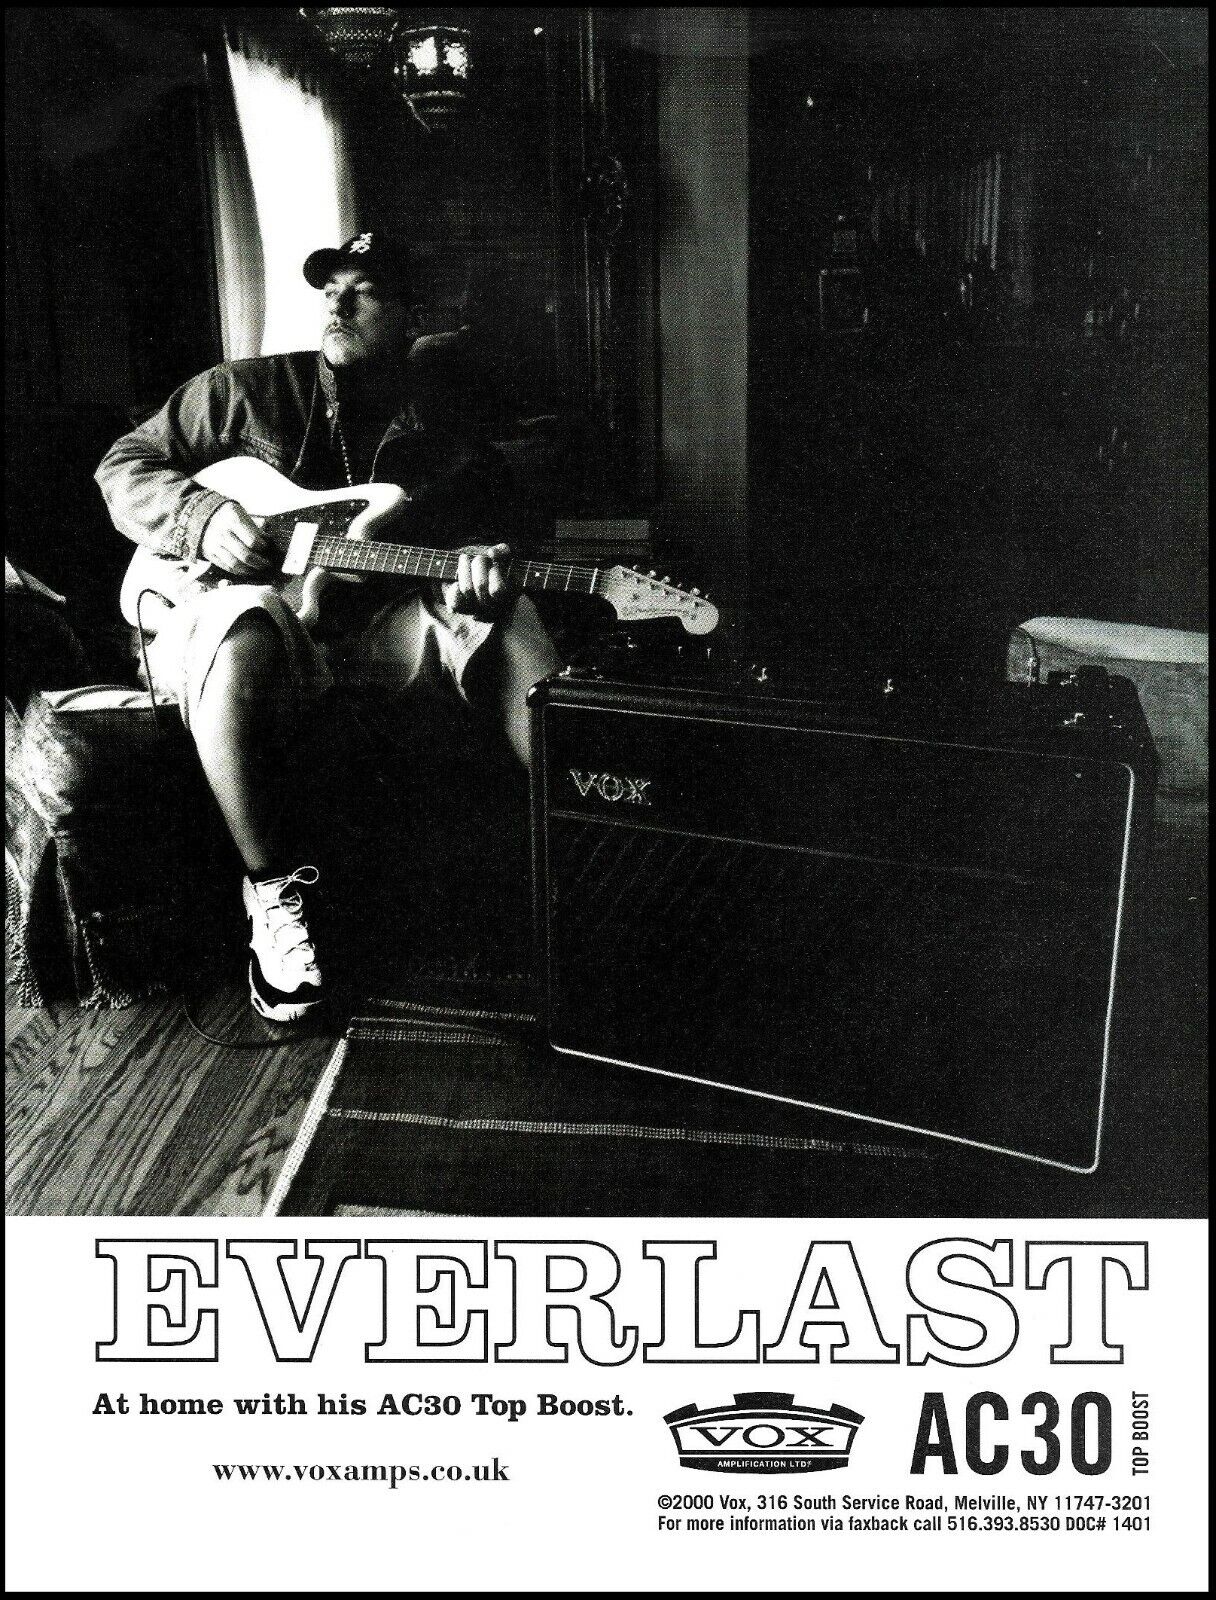 Everlast 2000 Vox AC30 Top Boost Guitar Amp advertisement 8 x 11 ad print